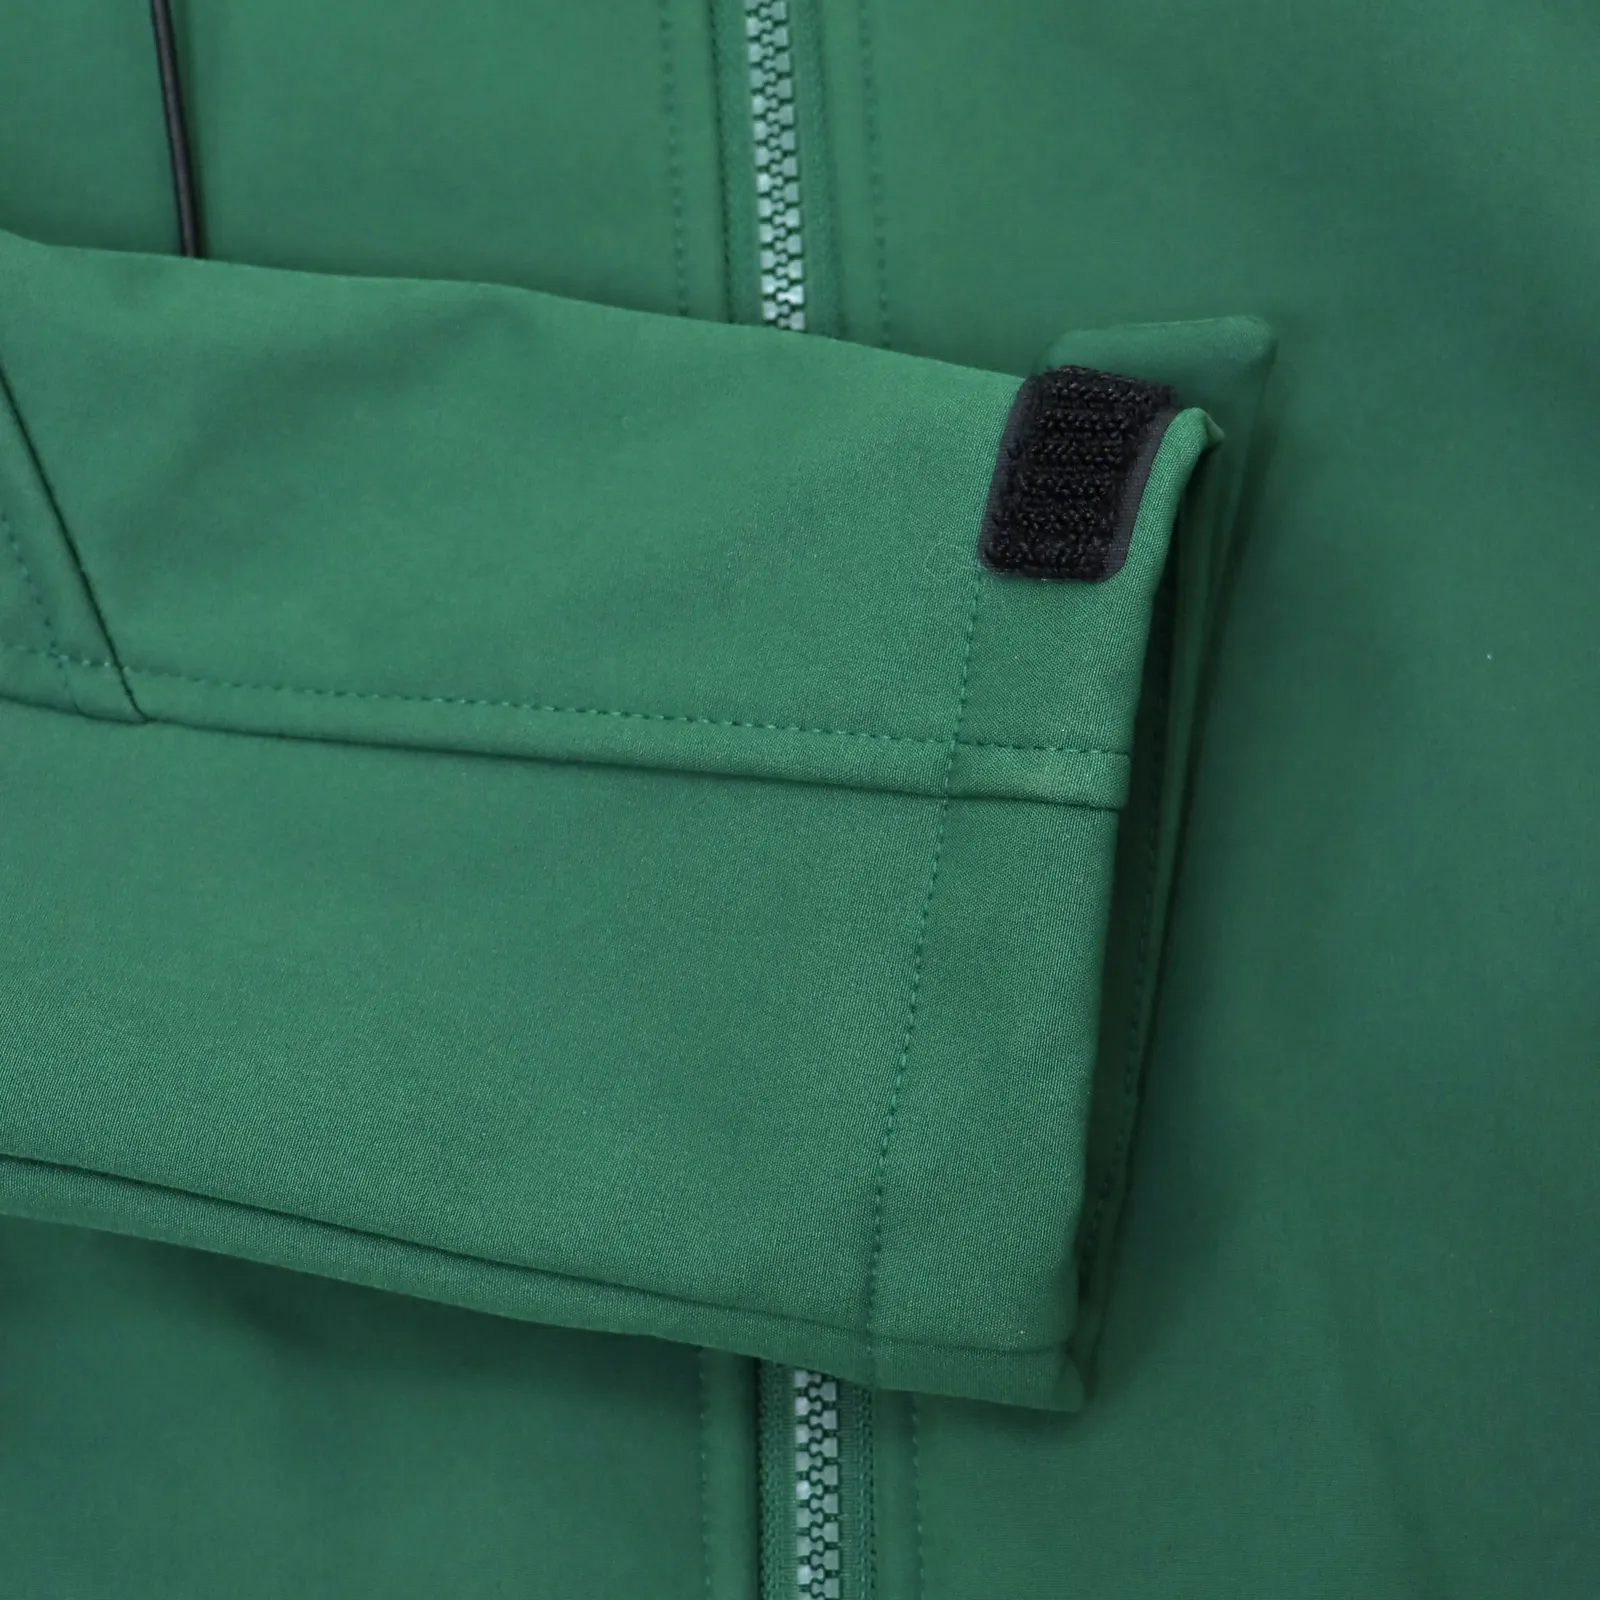 Fashionable Kids Outdoor Jacket Waterproof Windproof Warm Material Breathable Quick Dry Autumn Season Unisex Zipper